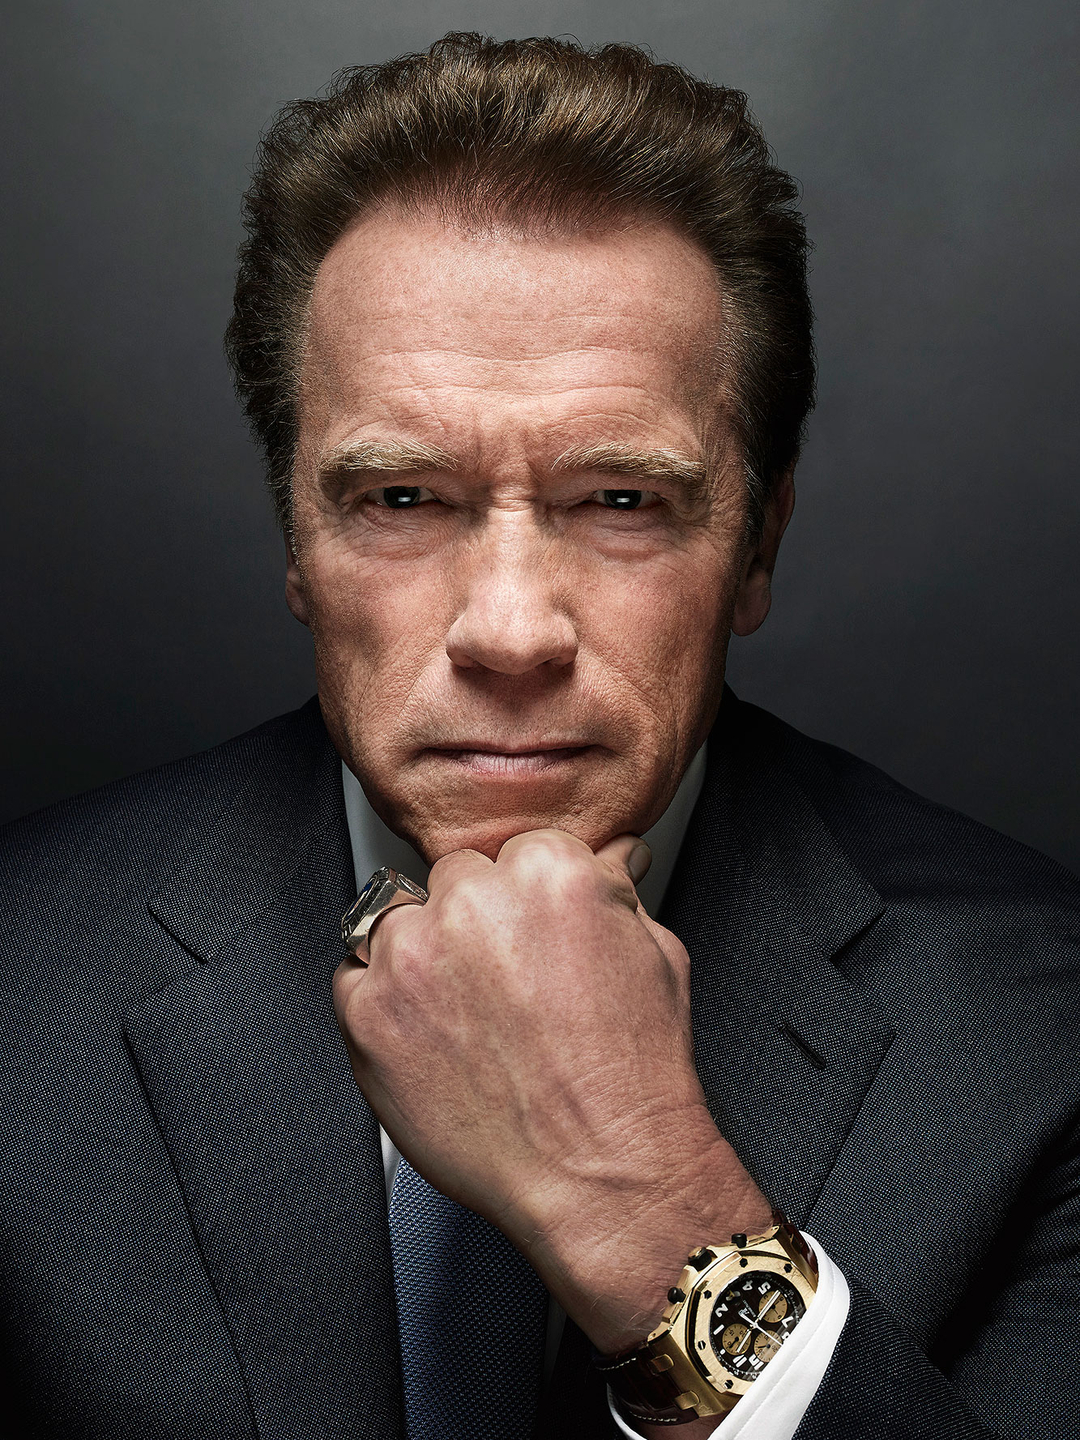 Arnold Schwarzenegger in real life